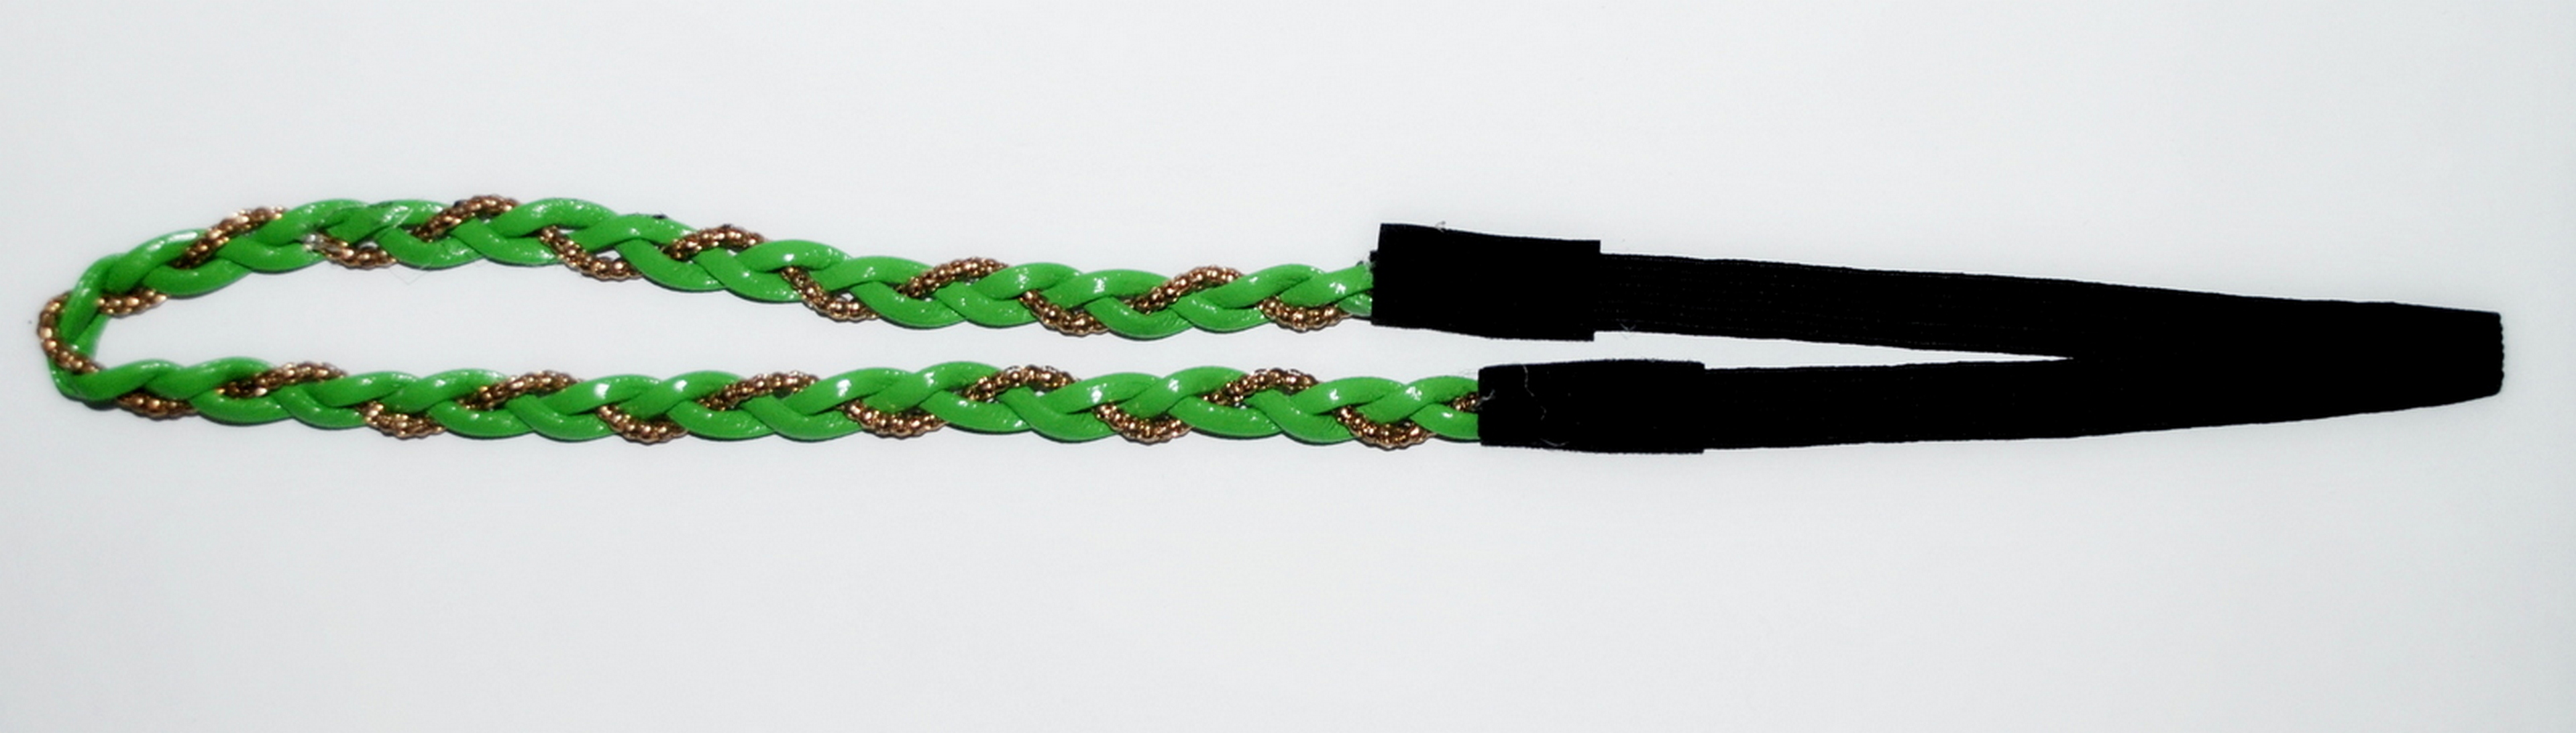 Повязка для волос Fashion Jewelry зеленая с золотой нитью fashion jewelry display stand rotating mannequin resin iron jewelry stand necklace bracelet anklet storage resin iron crafts